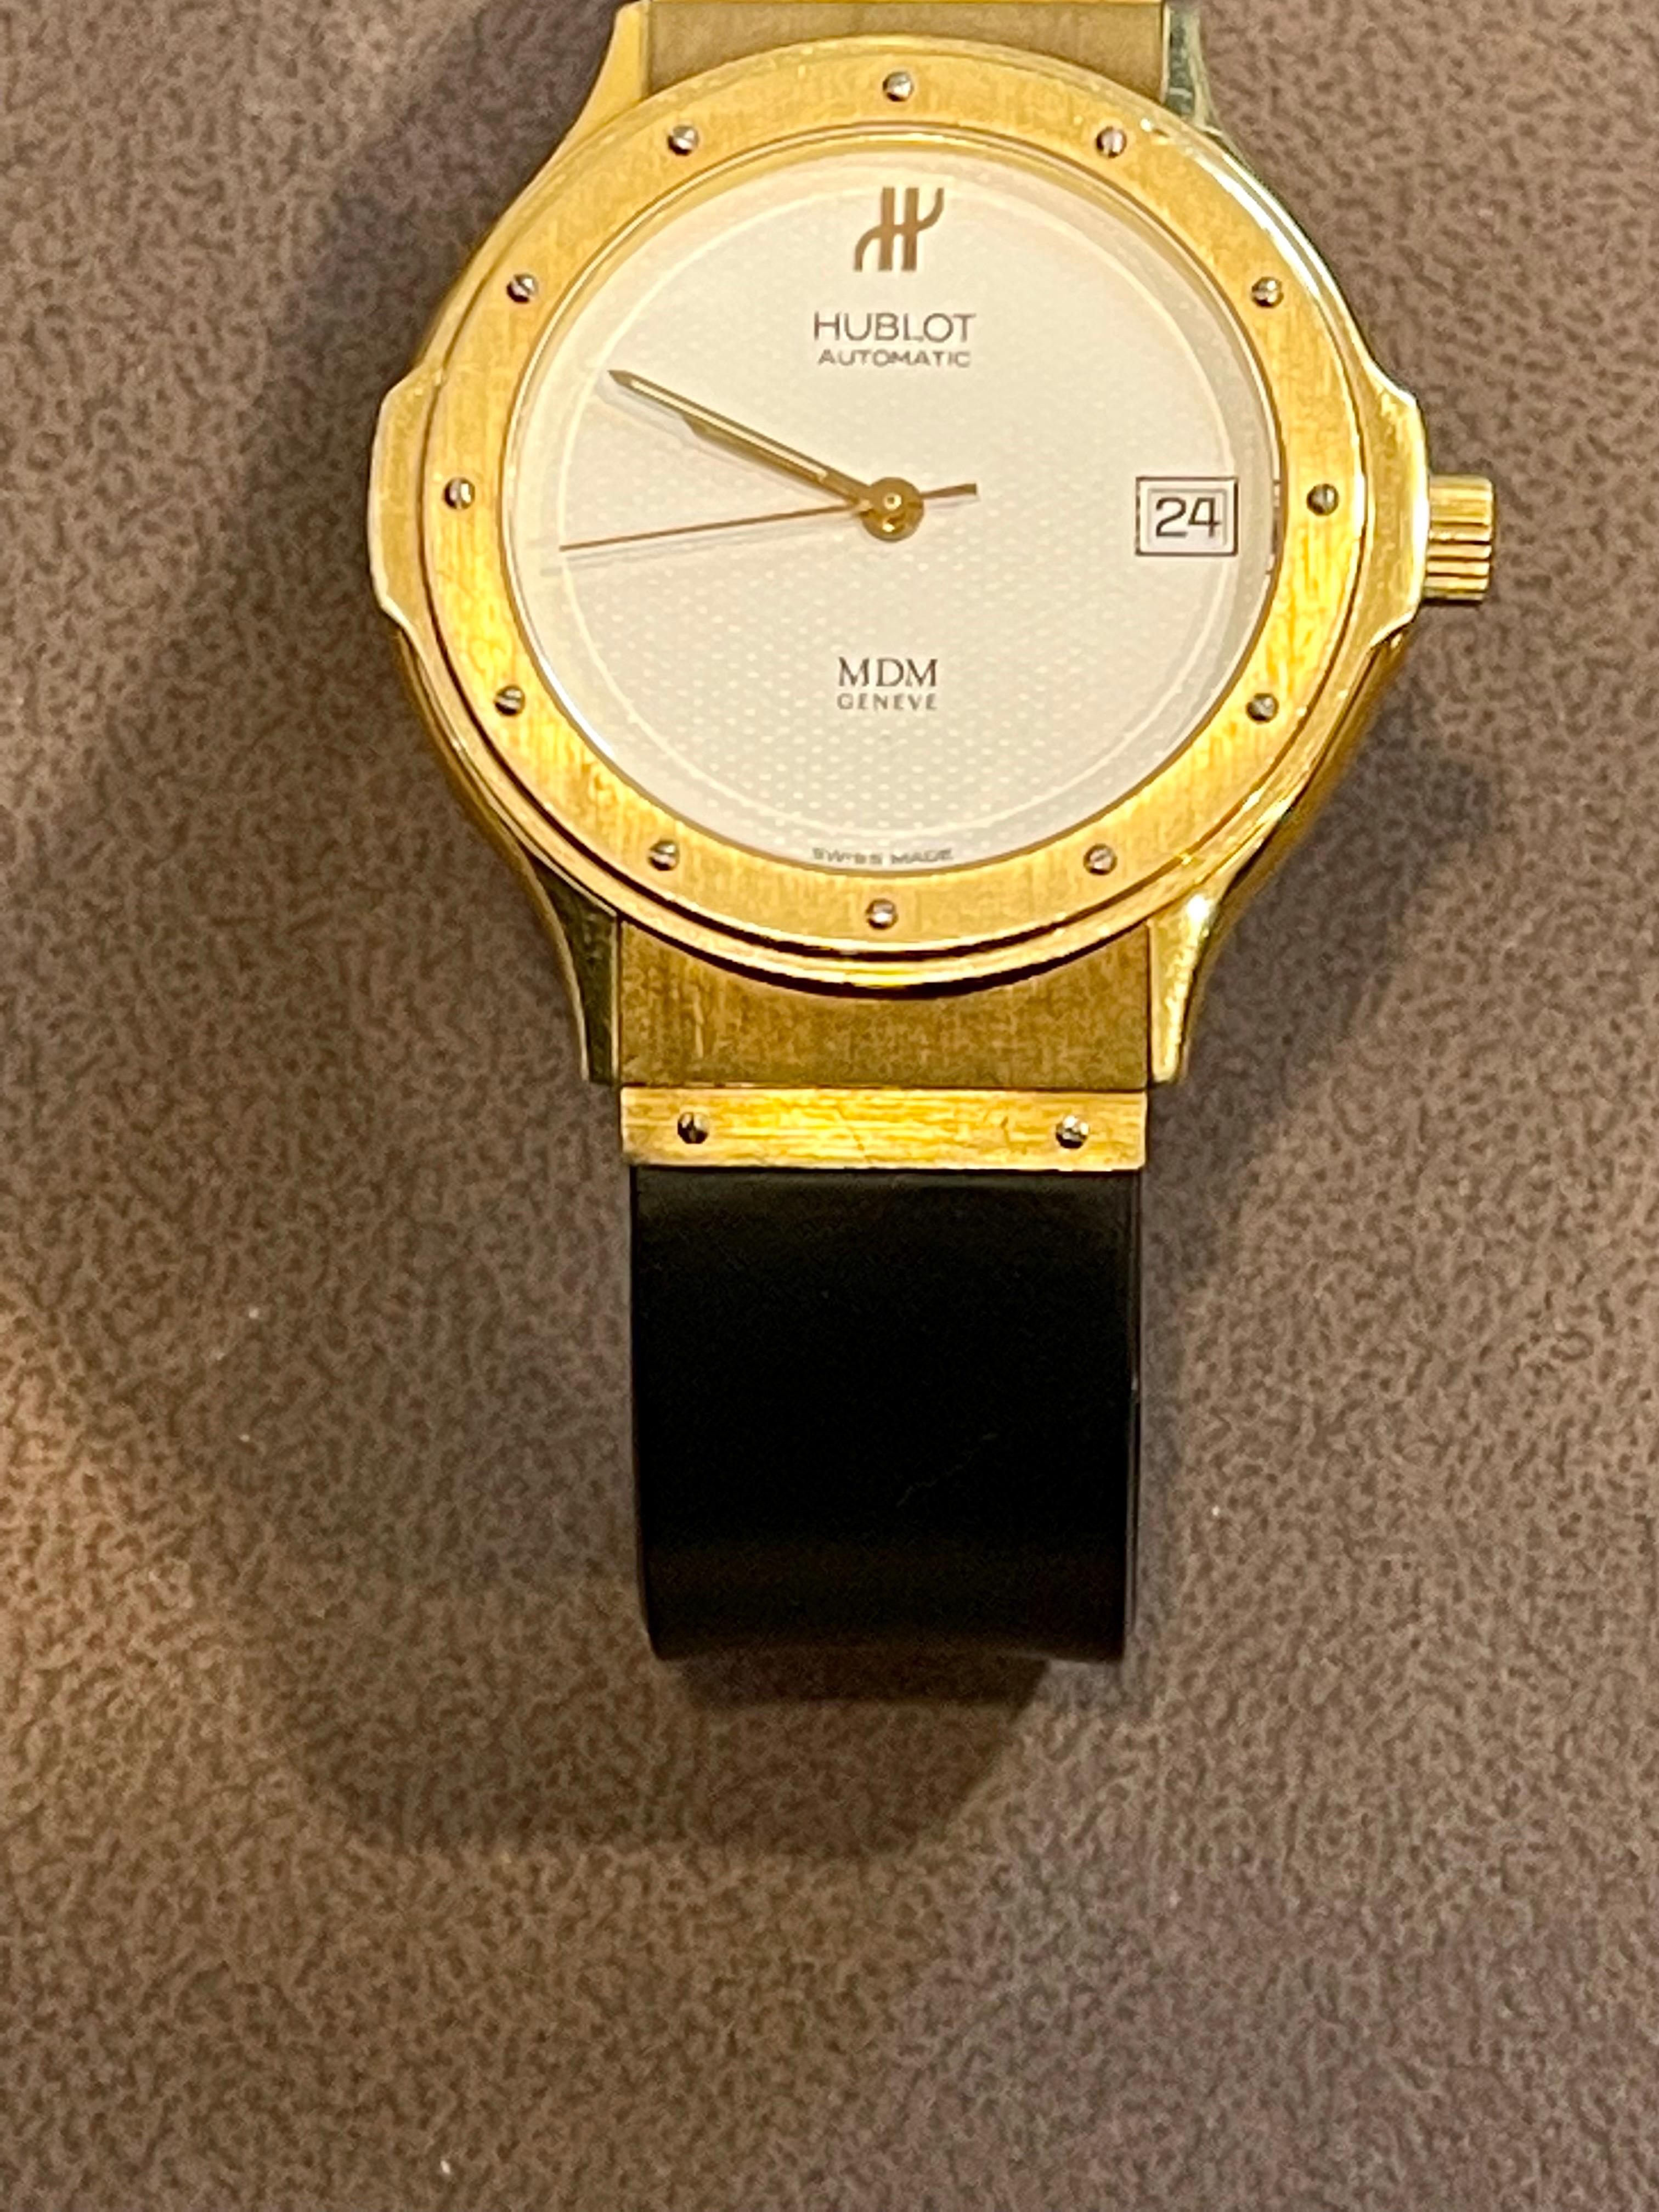 Hublot MDM 1581.3 18 Karat Yellow Gold Unisex Automatic Watch, White Dial For Sale 4